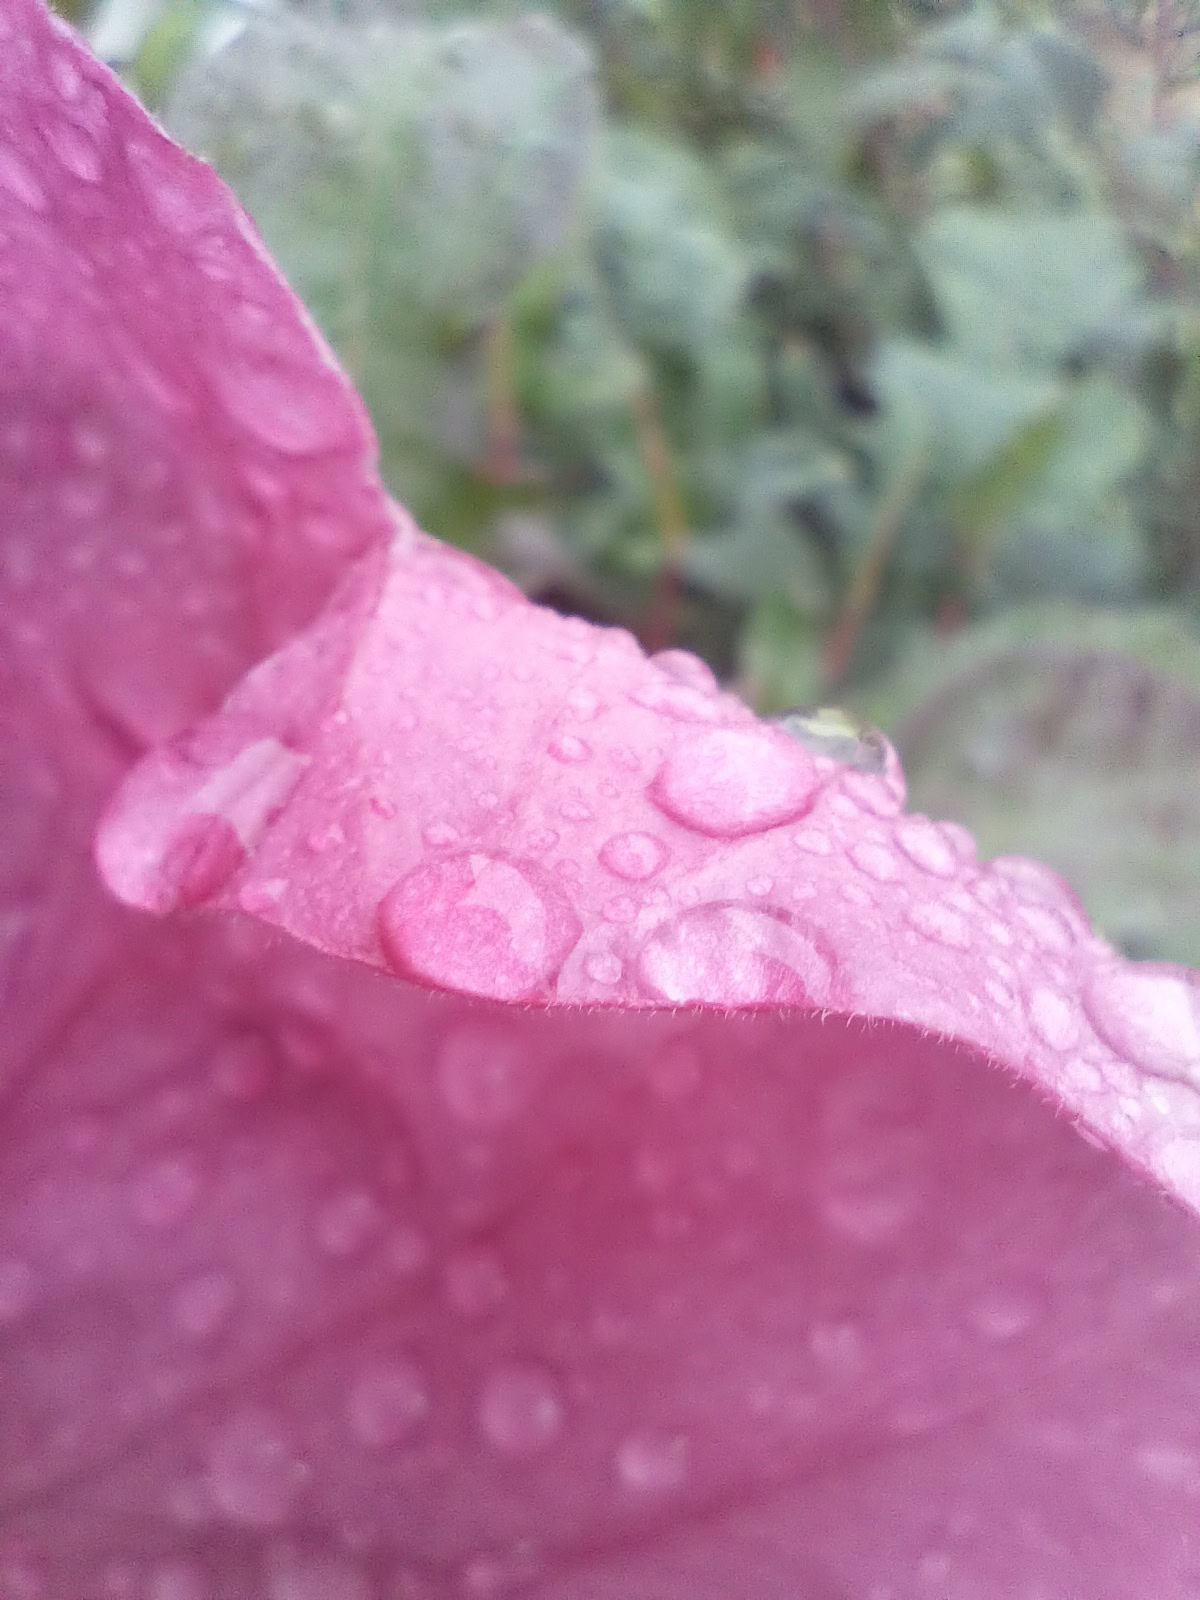 Macro photo of water droplets taken on Doogee S97 Pro